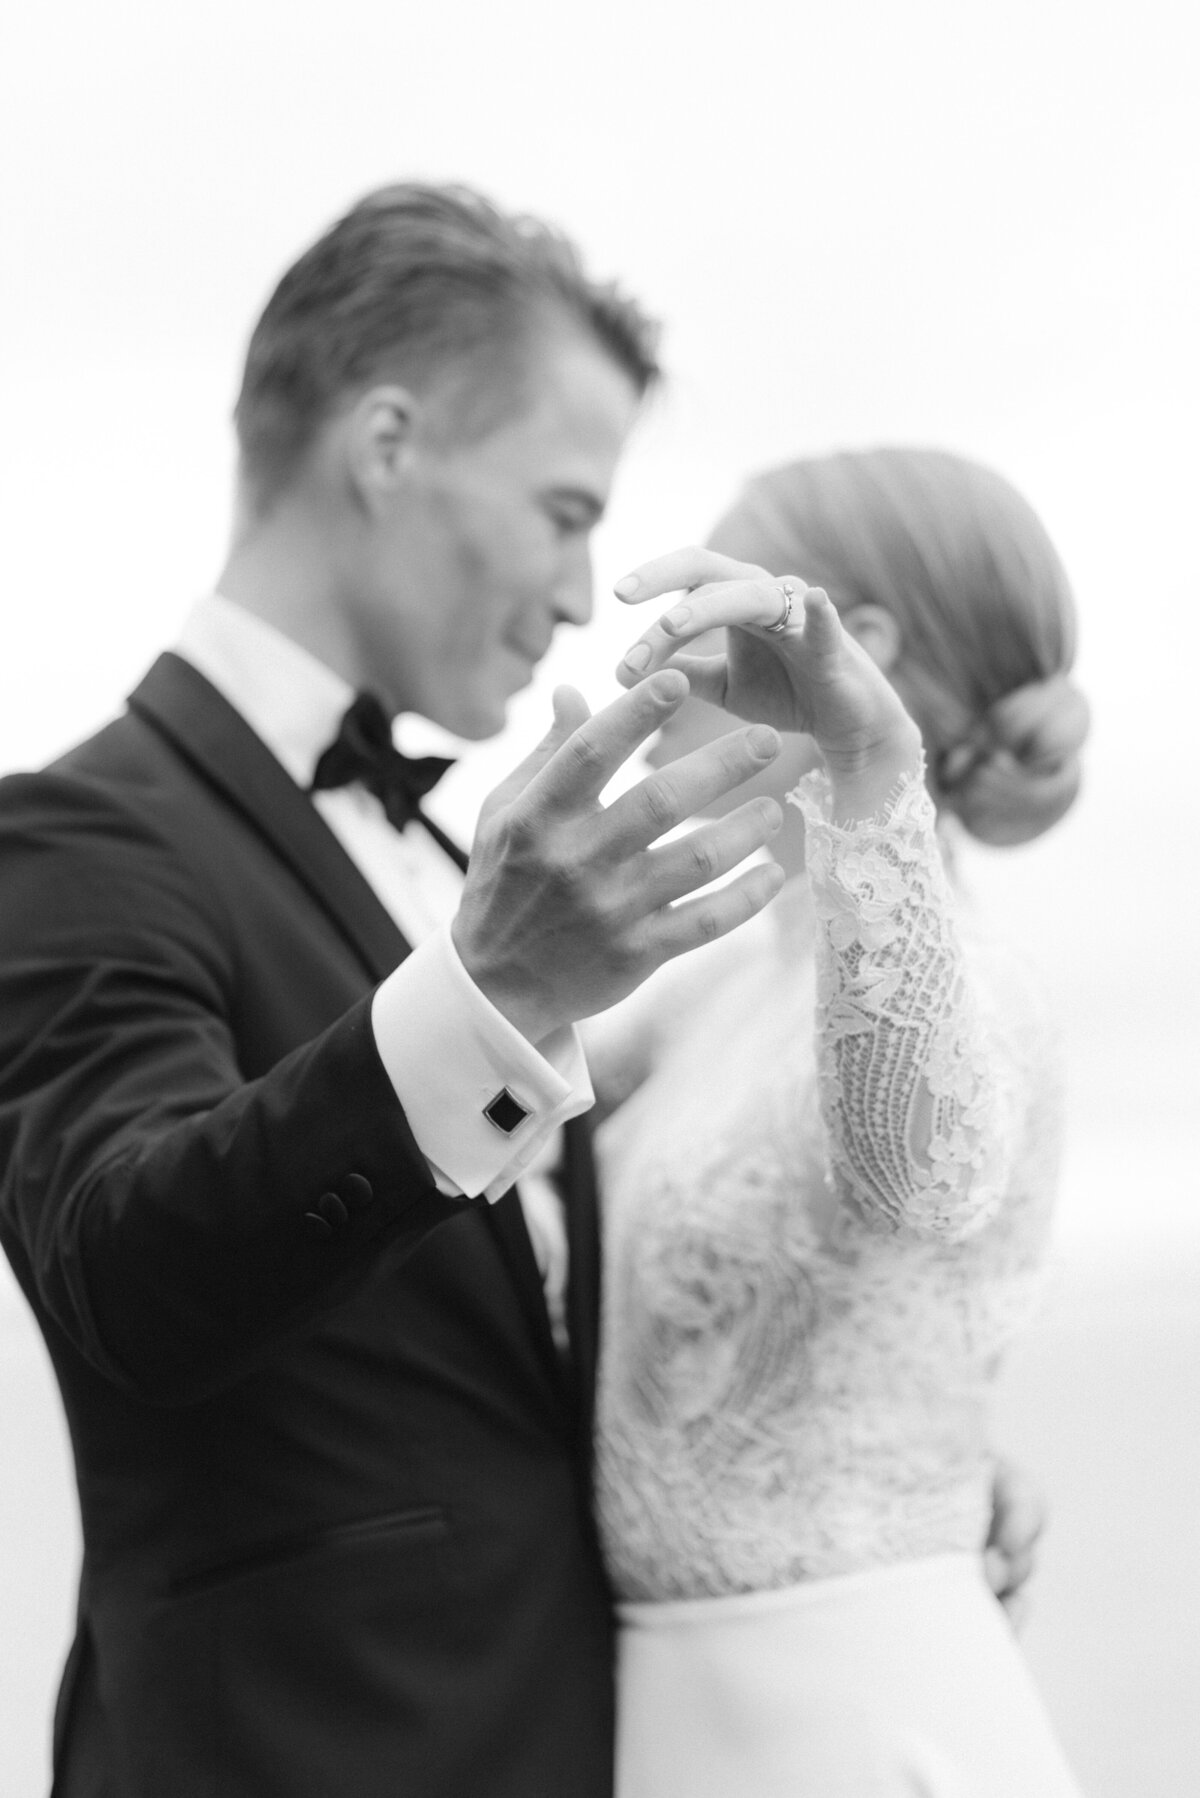 Hands of a wedding couple in a wedding photograph by Finnish photographer Hannika Gabrielsson.